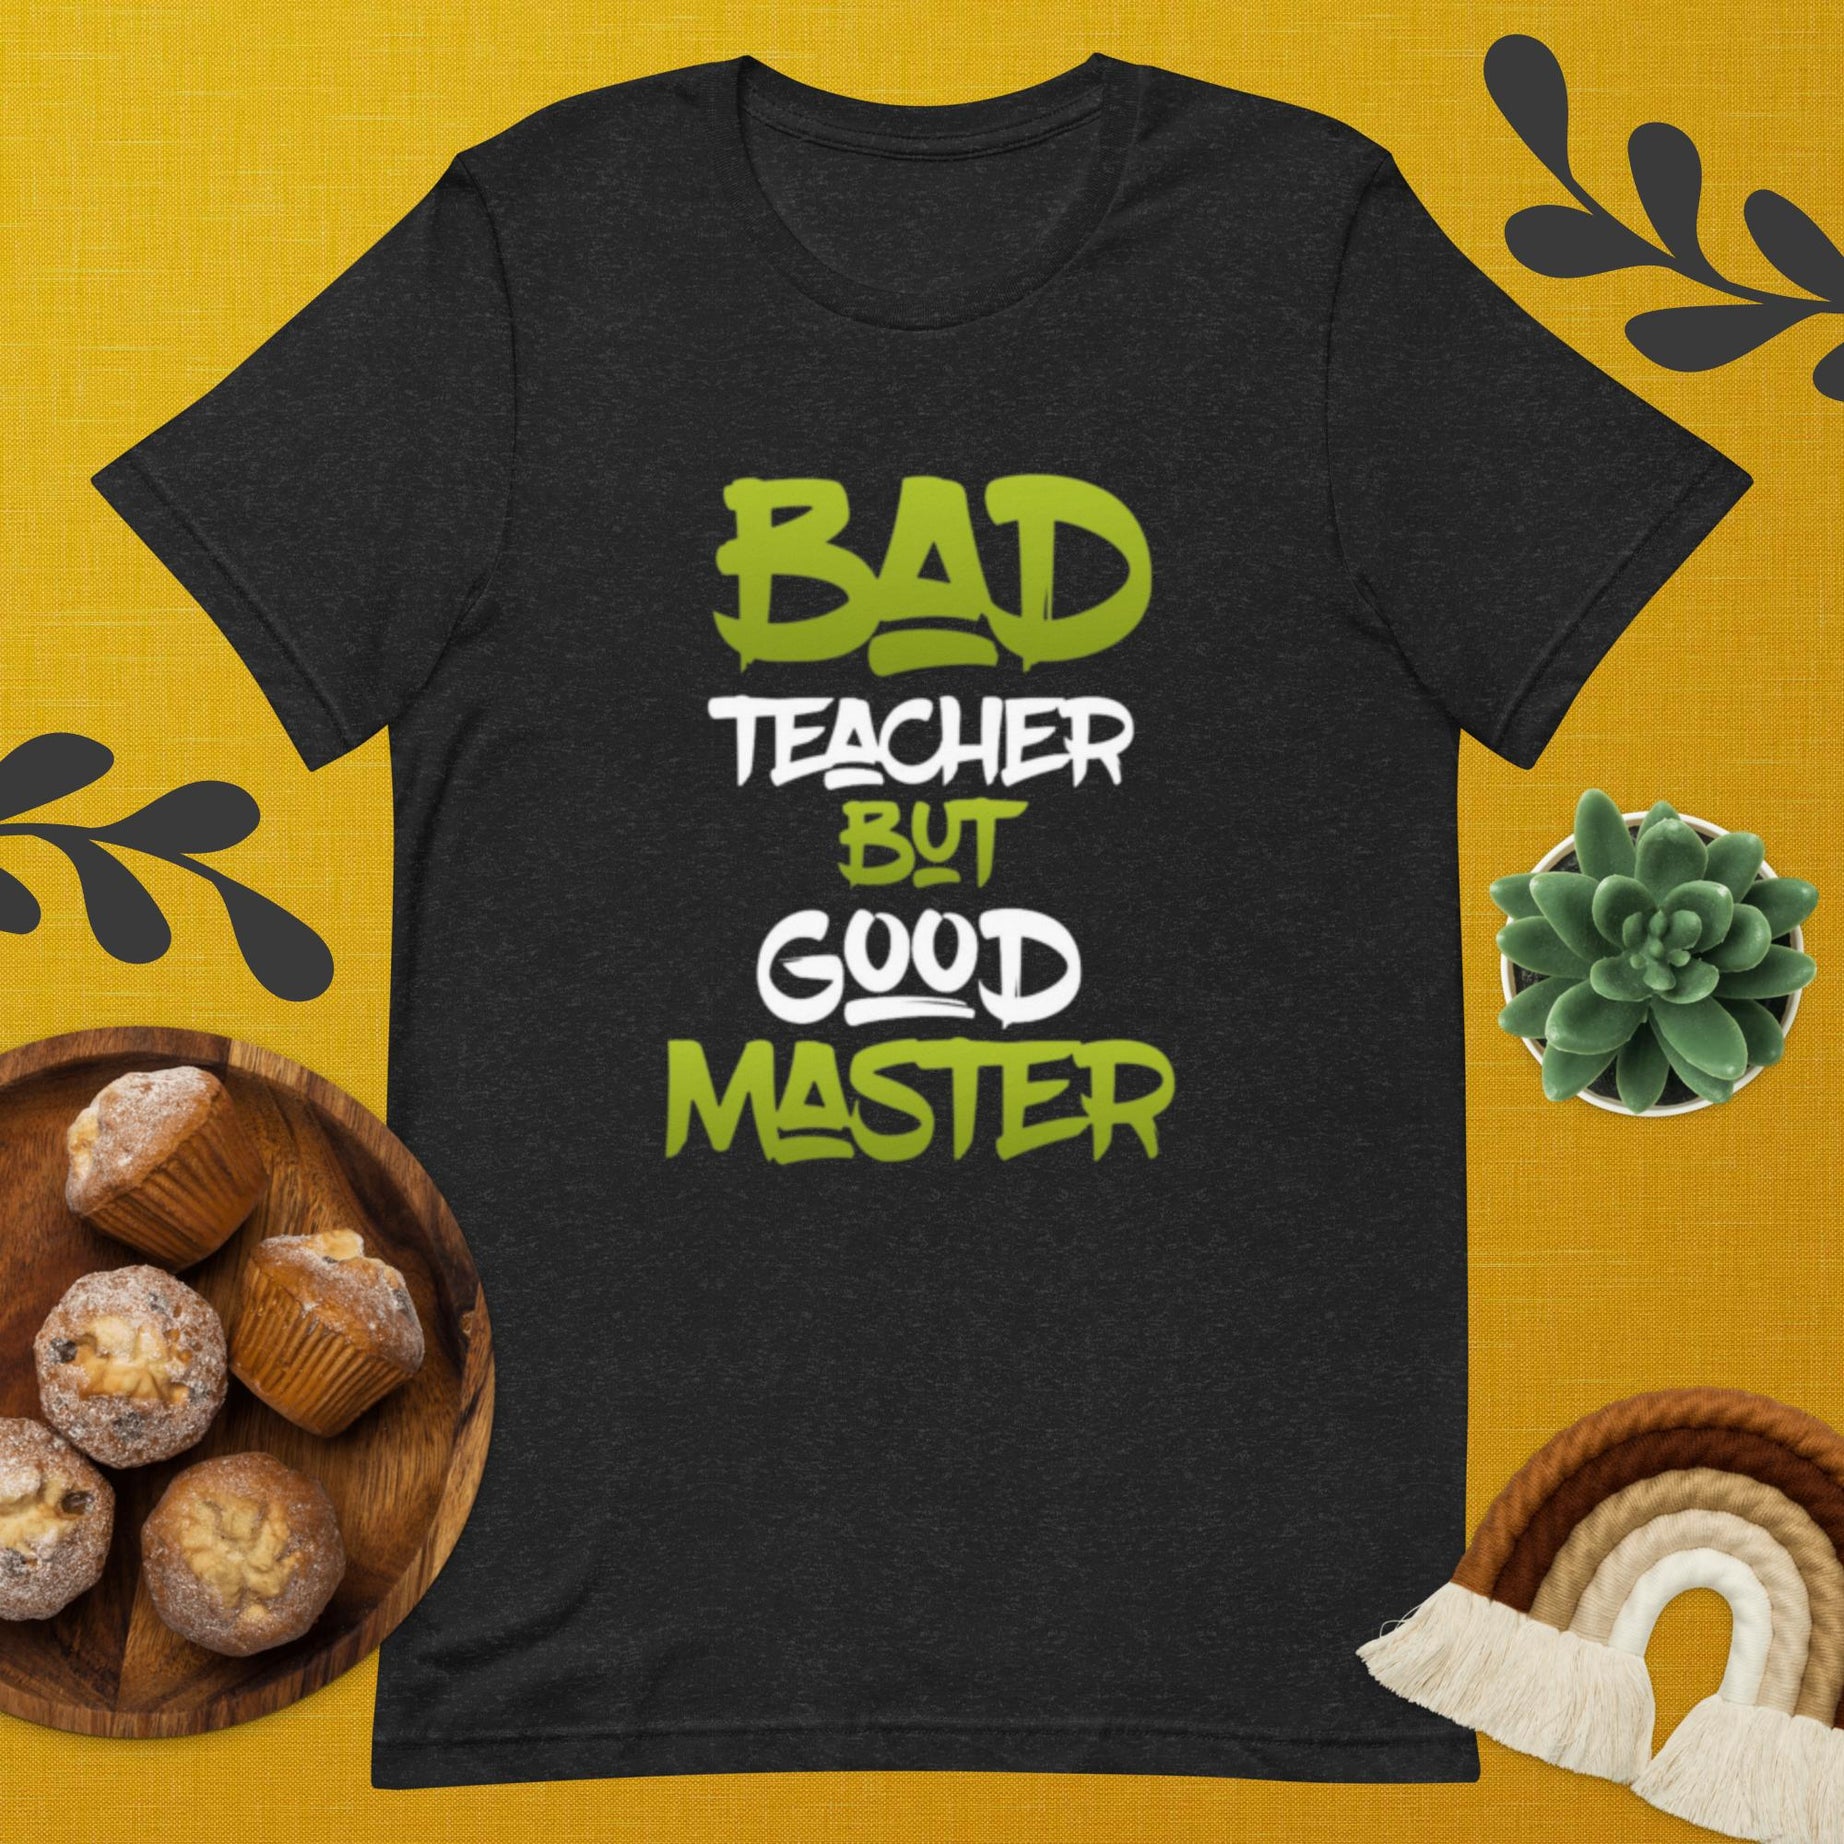 BAD TEACHER BUT GOOD MASTER T - SHIRT - Noorox